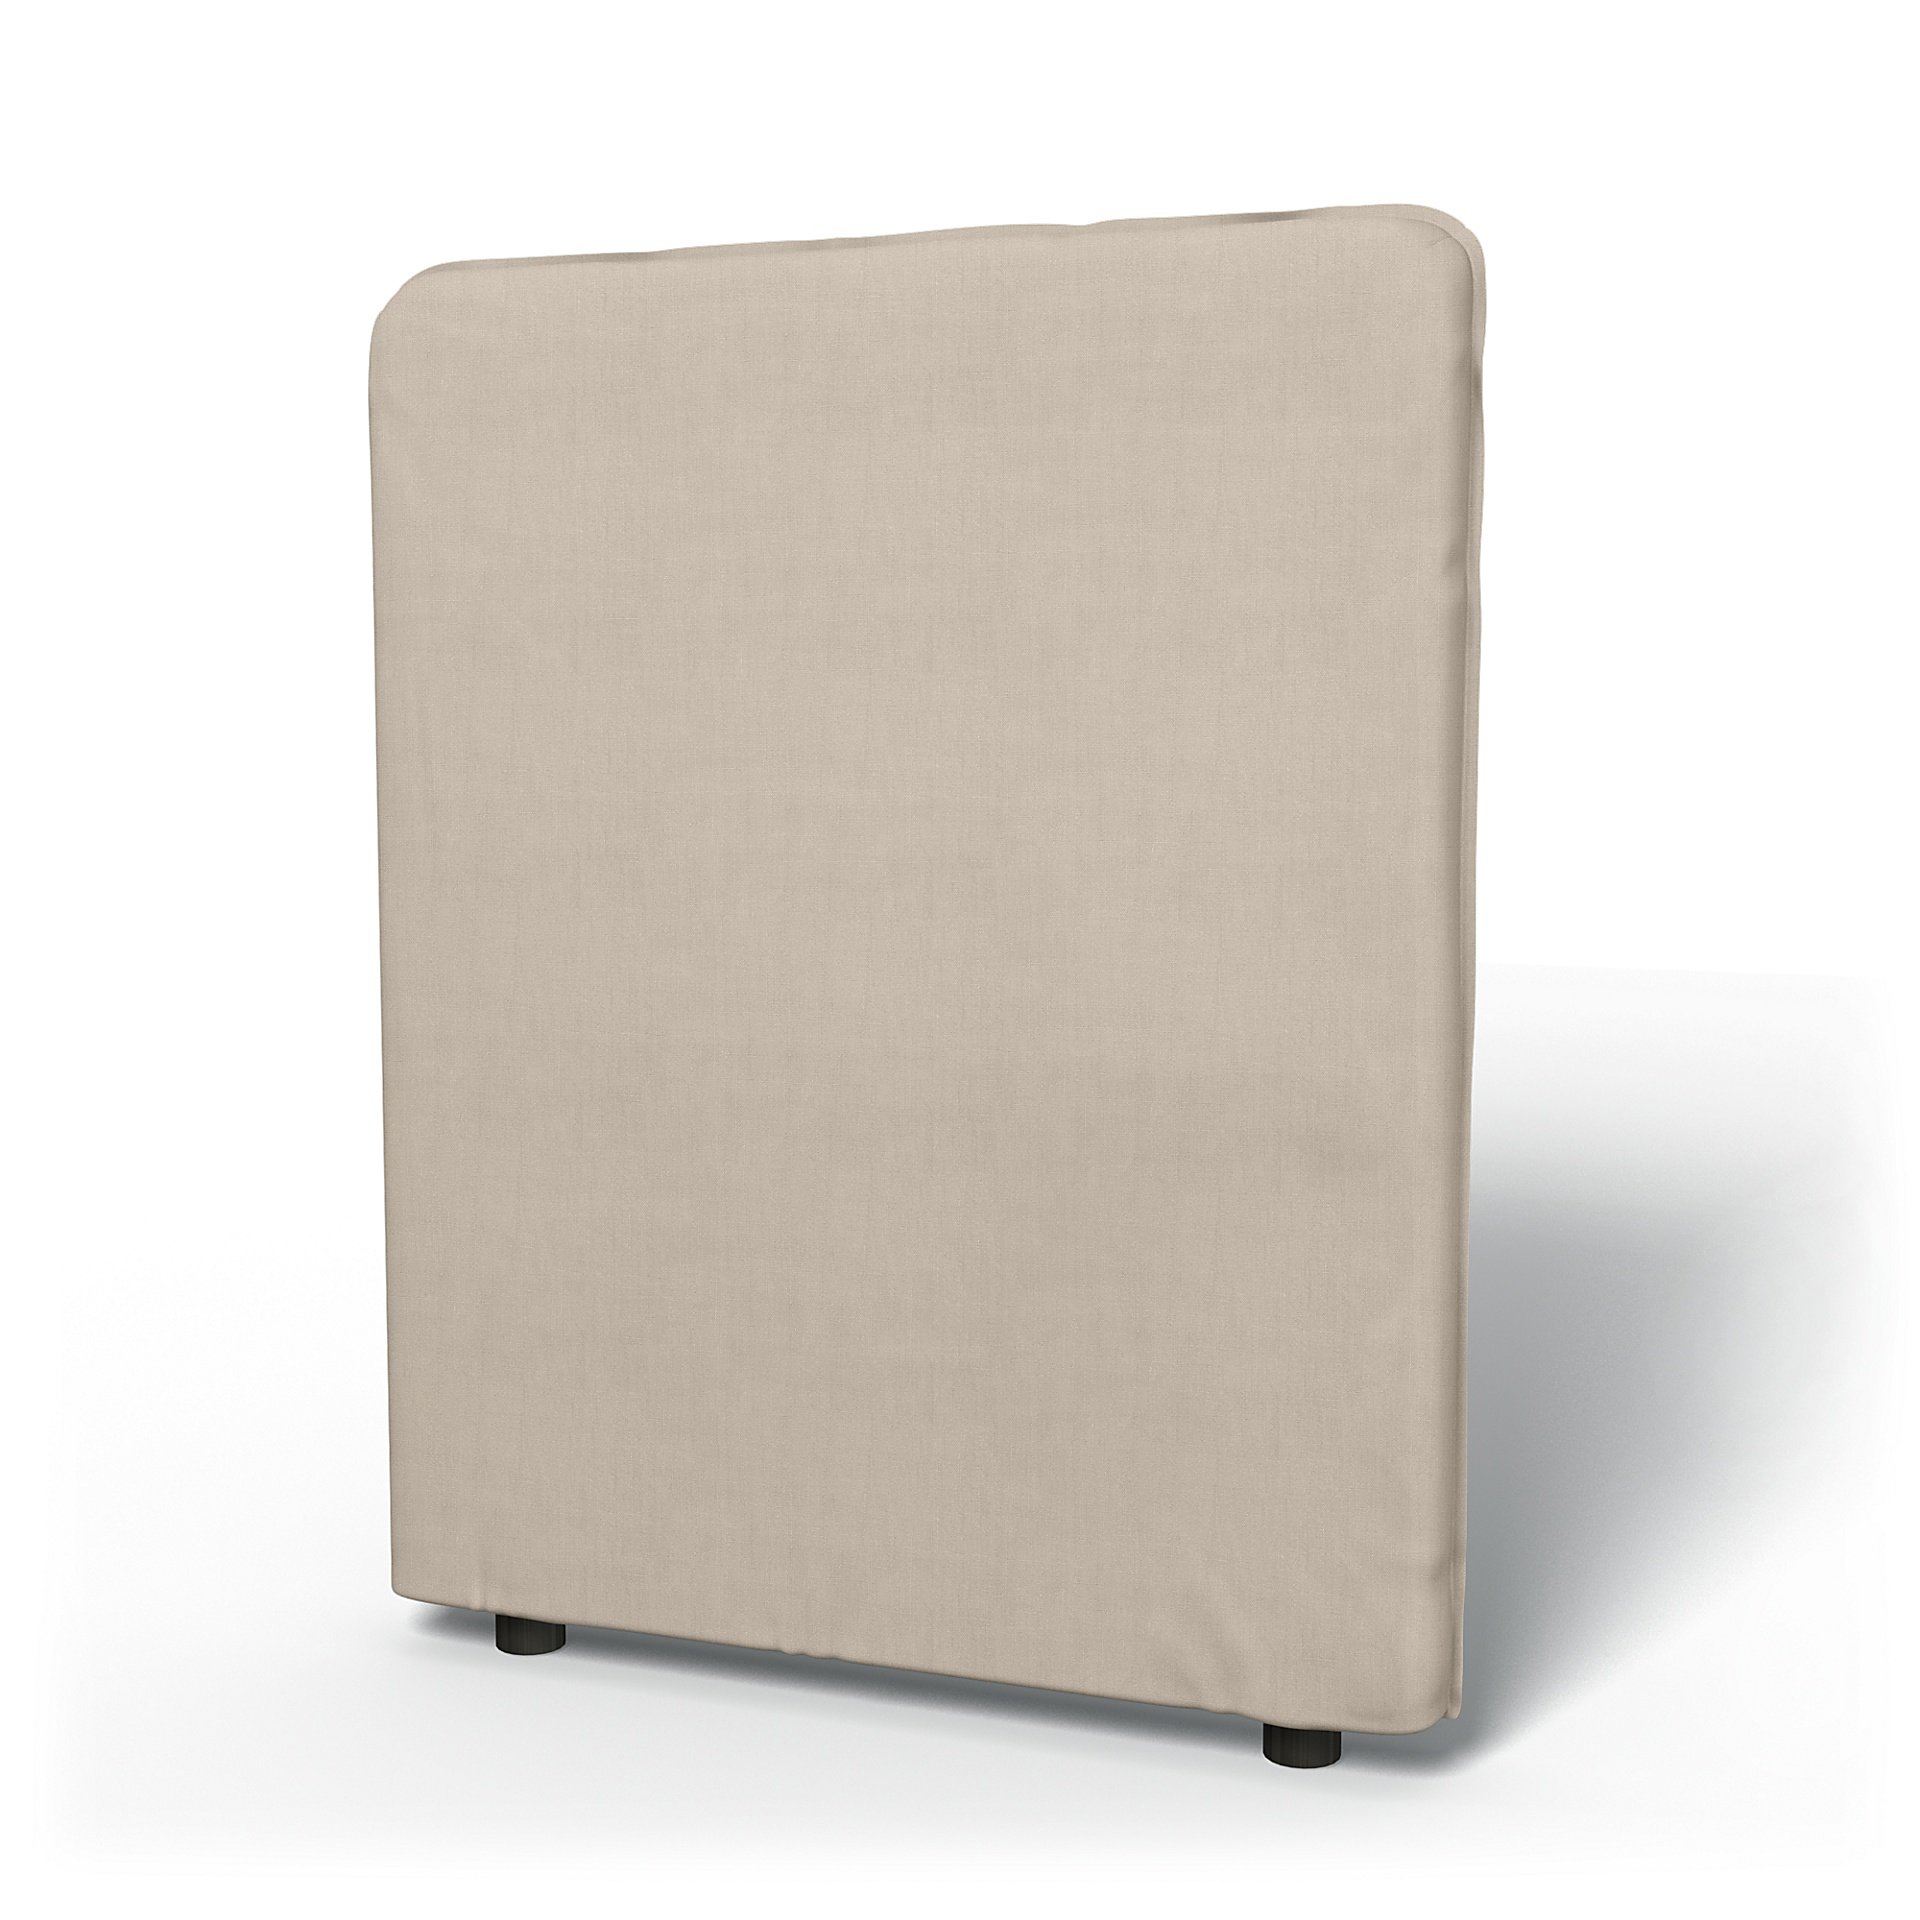 IKEA - Vallentuna High Backrest Cover 80x100cm 32x39in, Parchment, Linen - Bemz